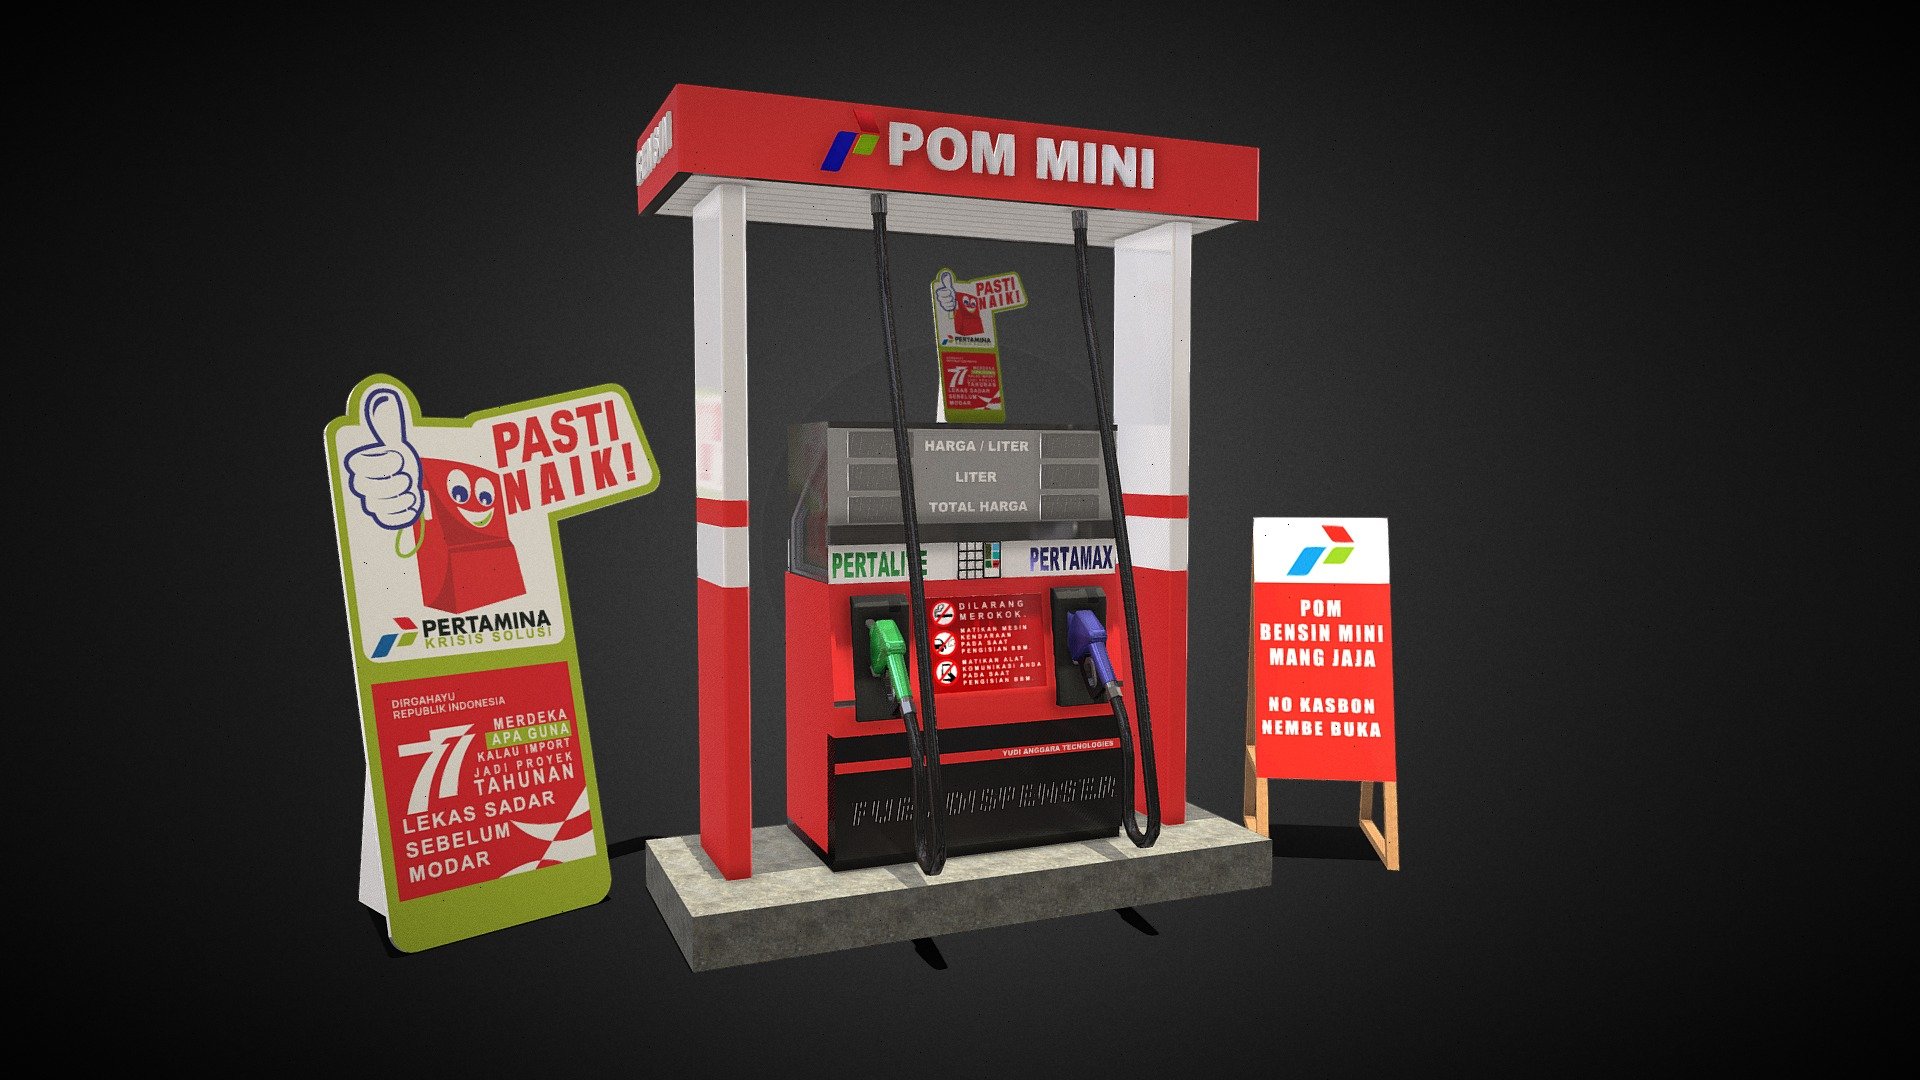 Gas Station - PETROL GAS STATION  PERTAMINI INDONESIAN - 3D model by yudi.rgu 3d model